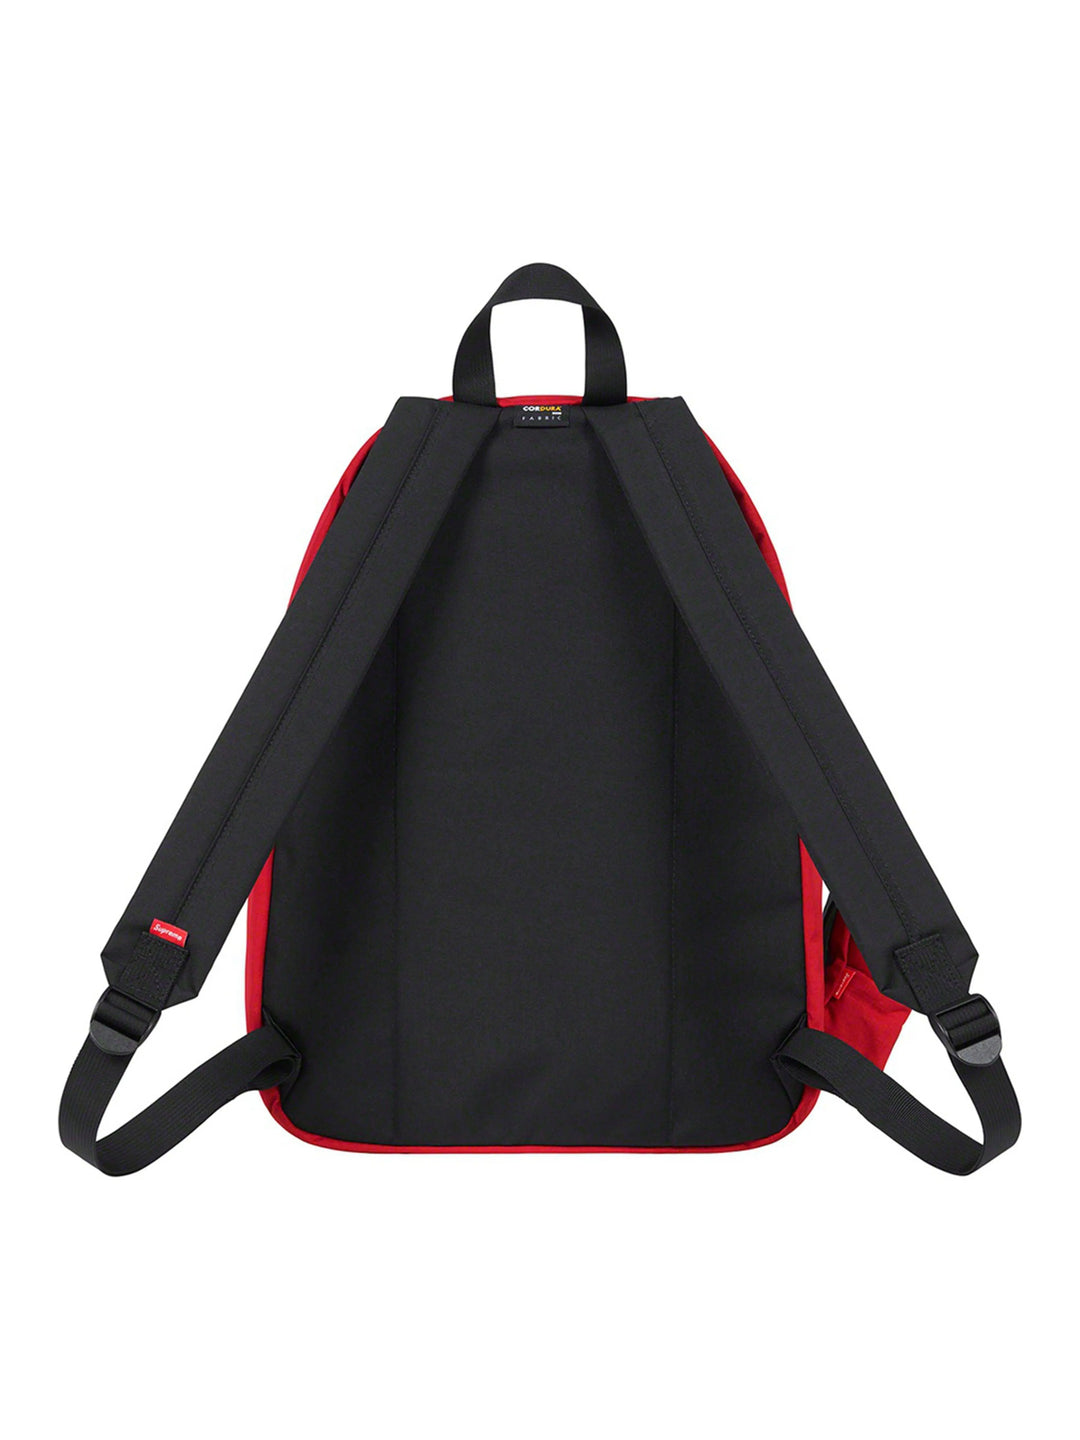 Supreme Vampire Boy Backpack Red [SS21] Prior